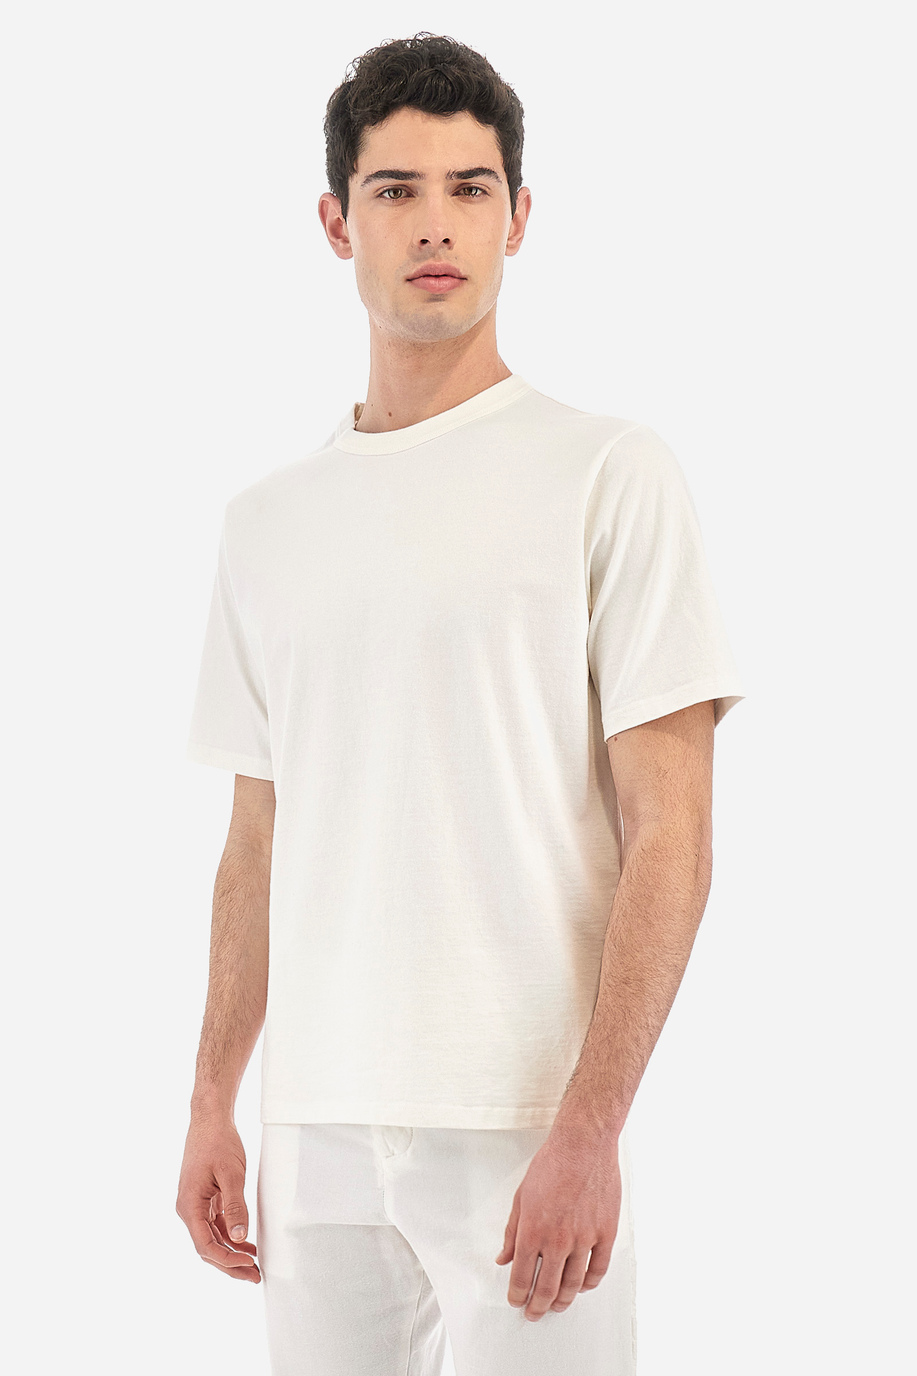 Herren T-shirt mit kurzen Ärmeln 100%Baumwolle normale Passform - Vincente - test 2 | La Martina - Official Online Shop